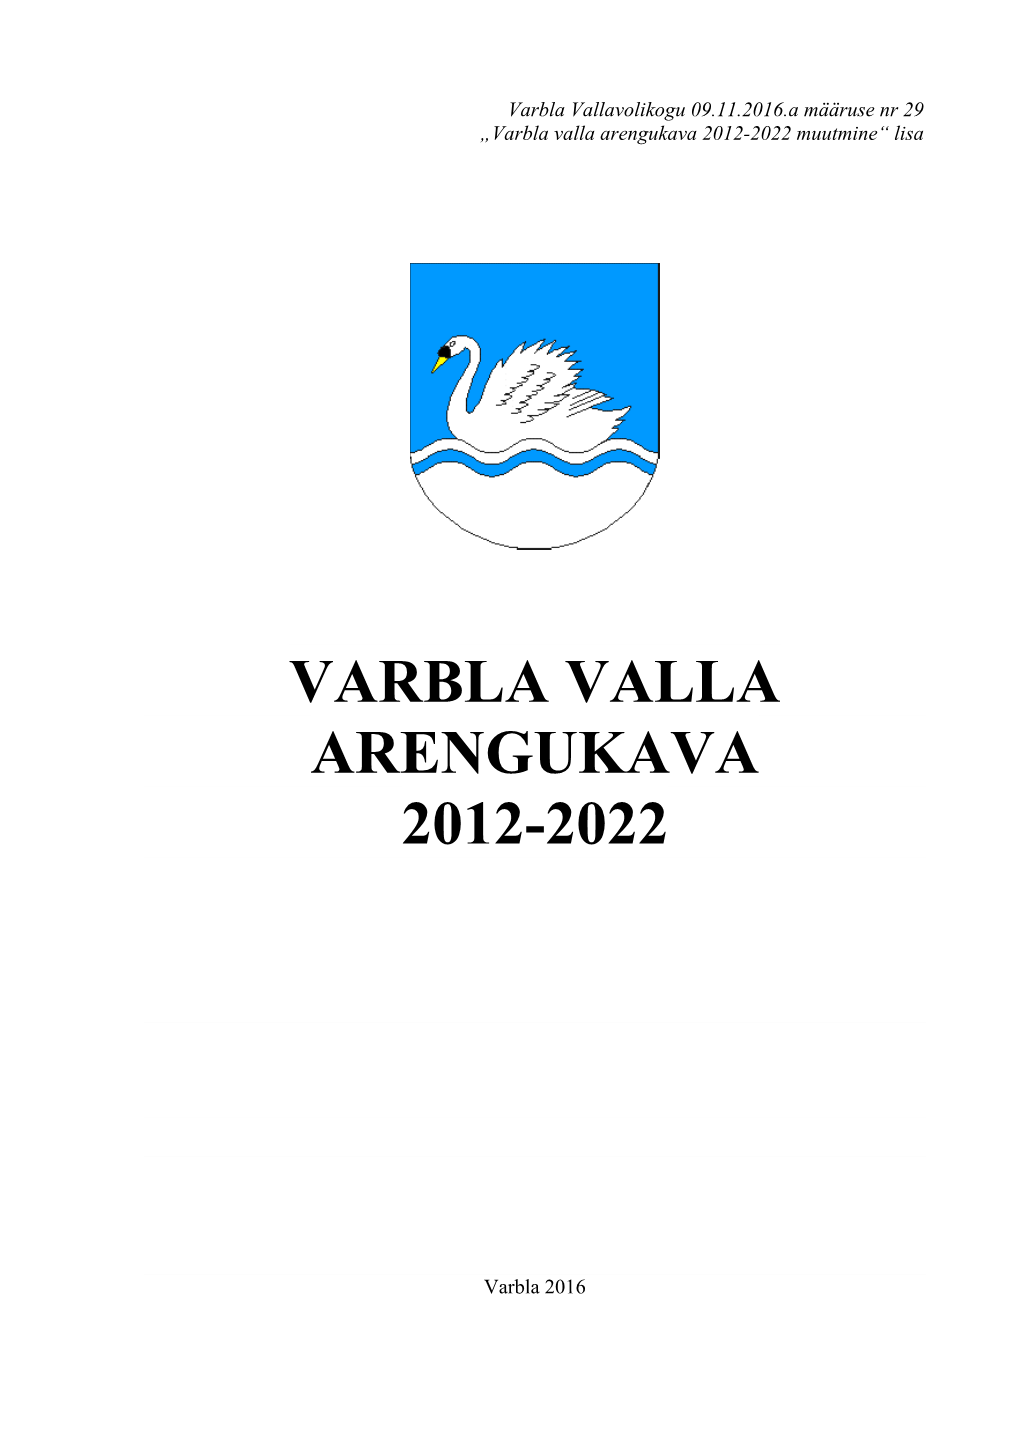 Varbla Valla Arengukava 2012-2022 Muutmine“ Lisa